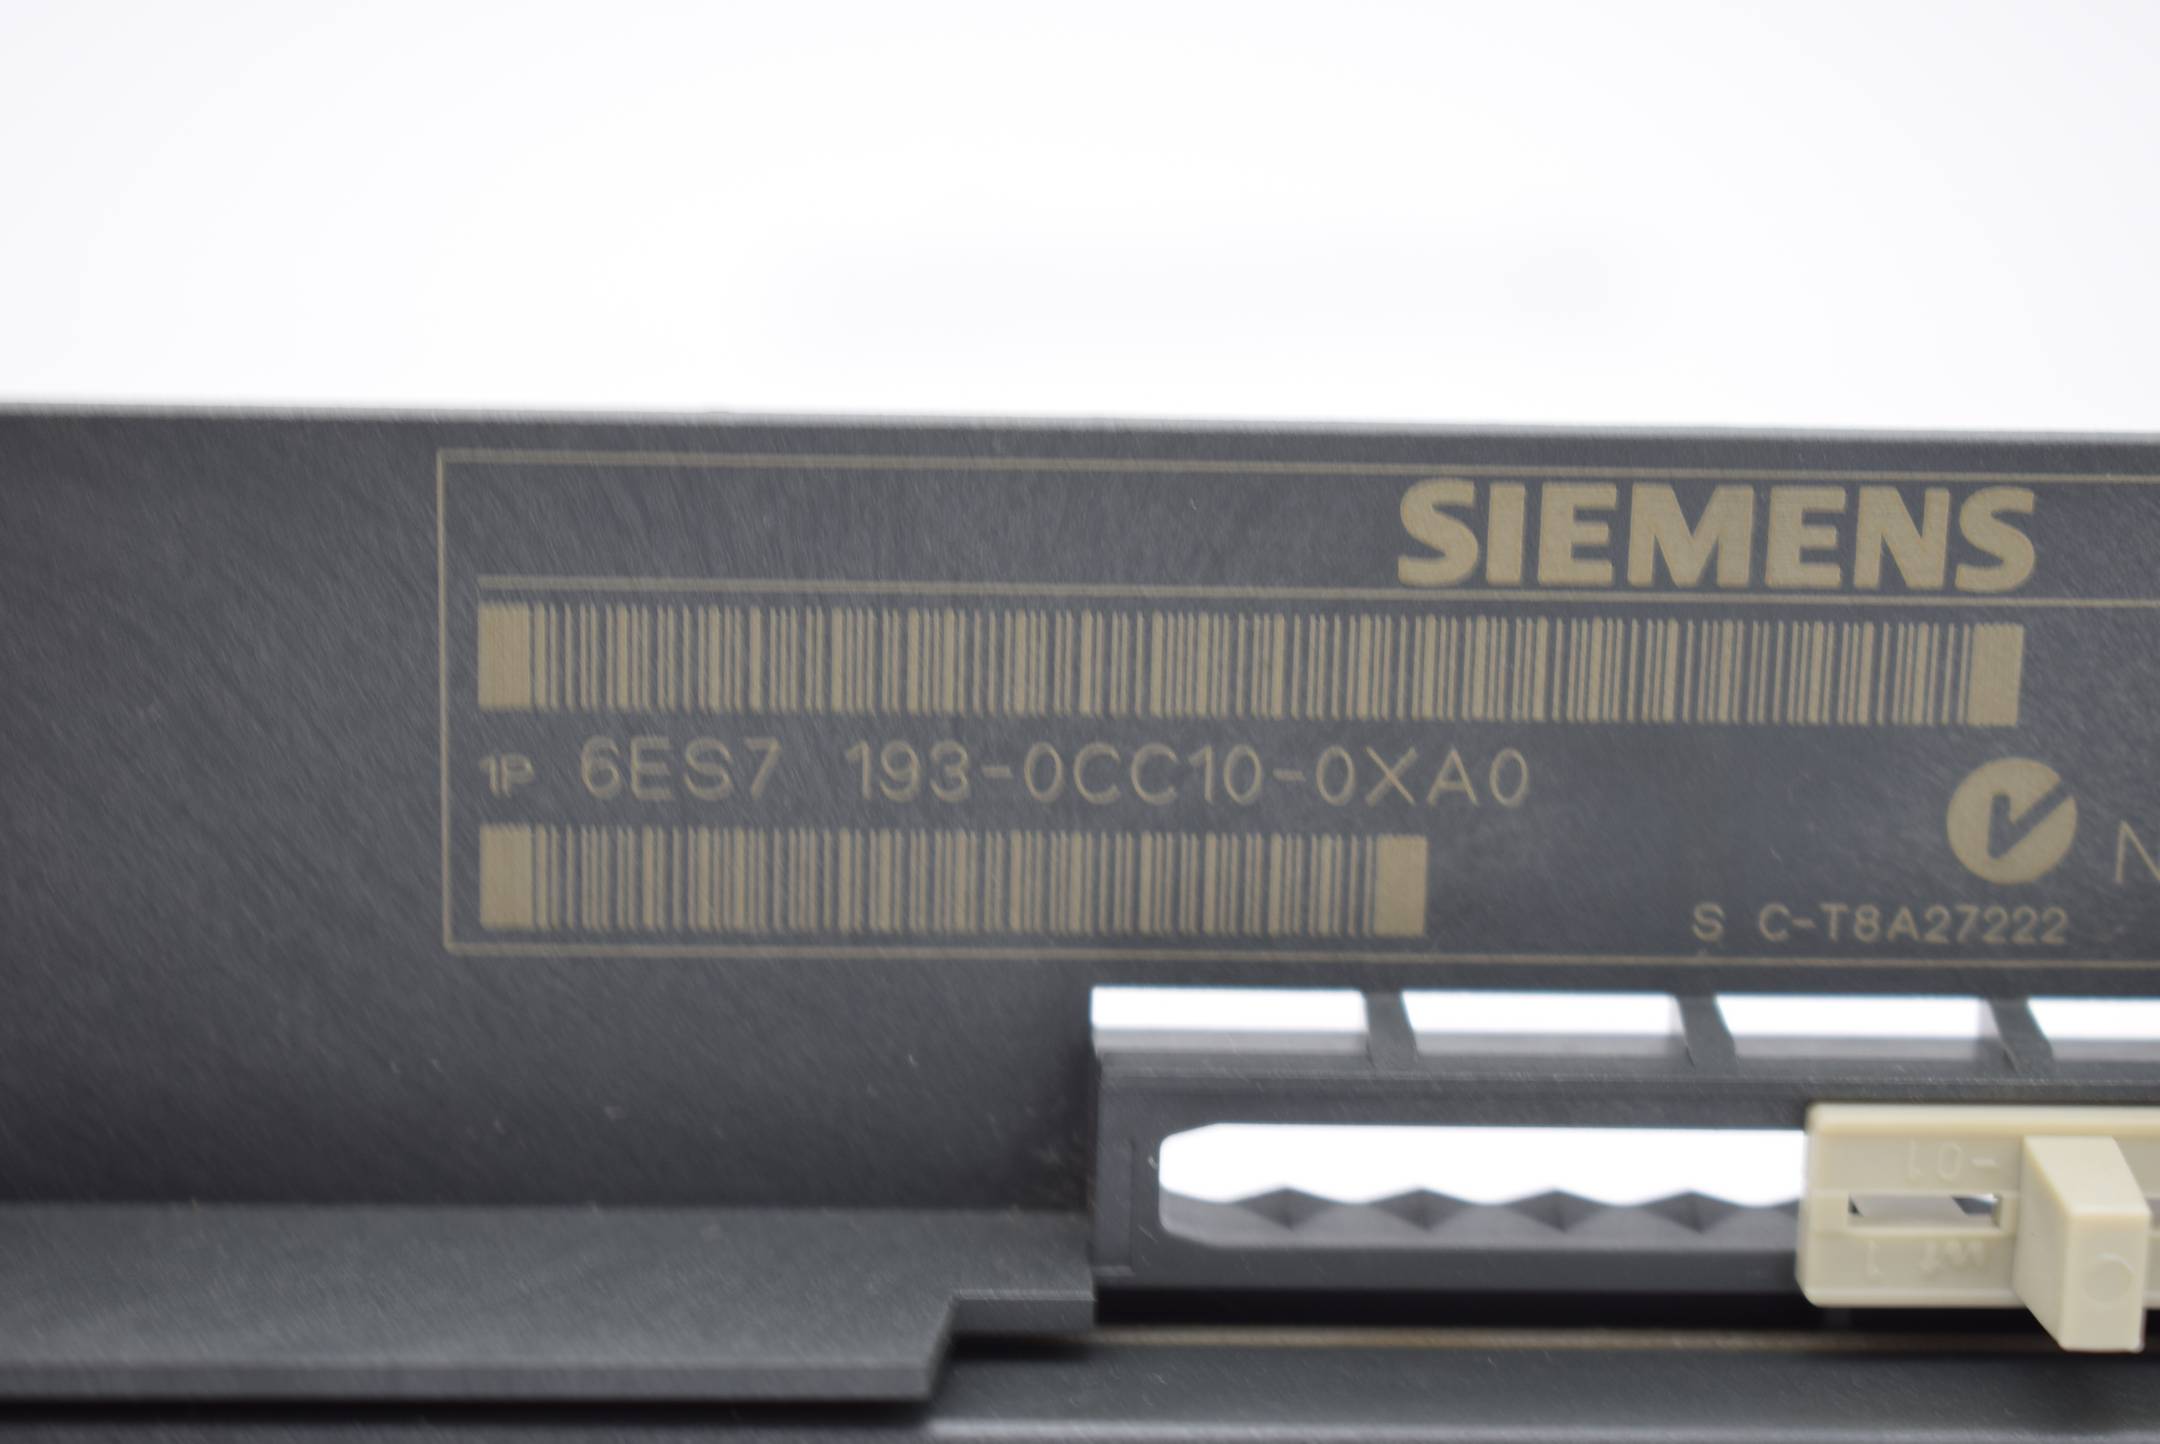 Siemens simatic S7 6ES7 193-0CC10-0XA0 ( 6ES7193-0CC10-0XA0 )